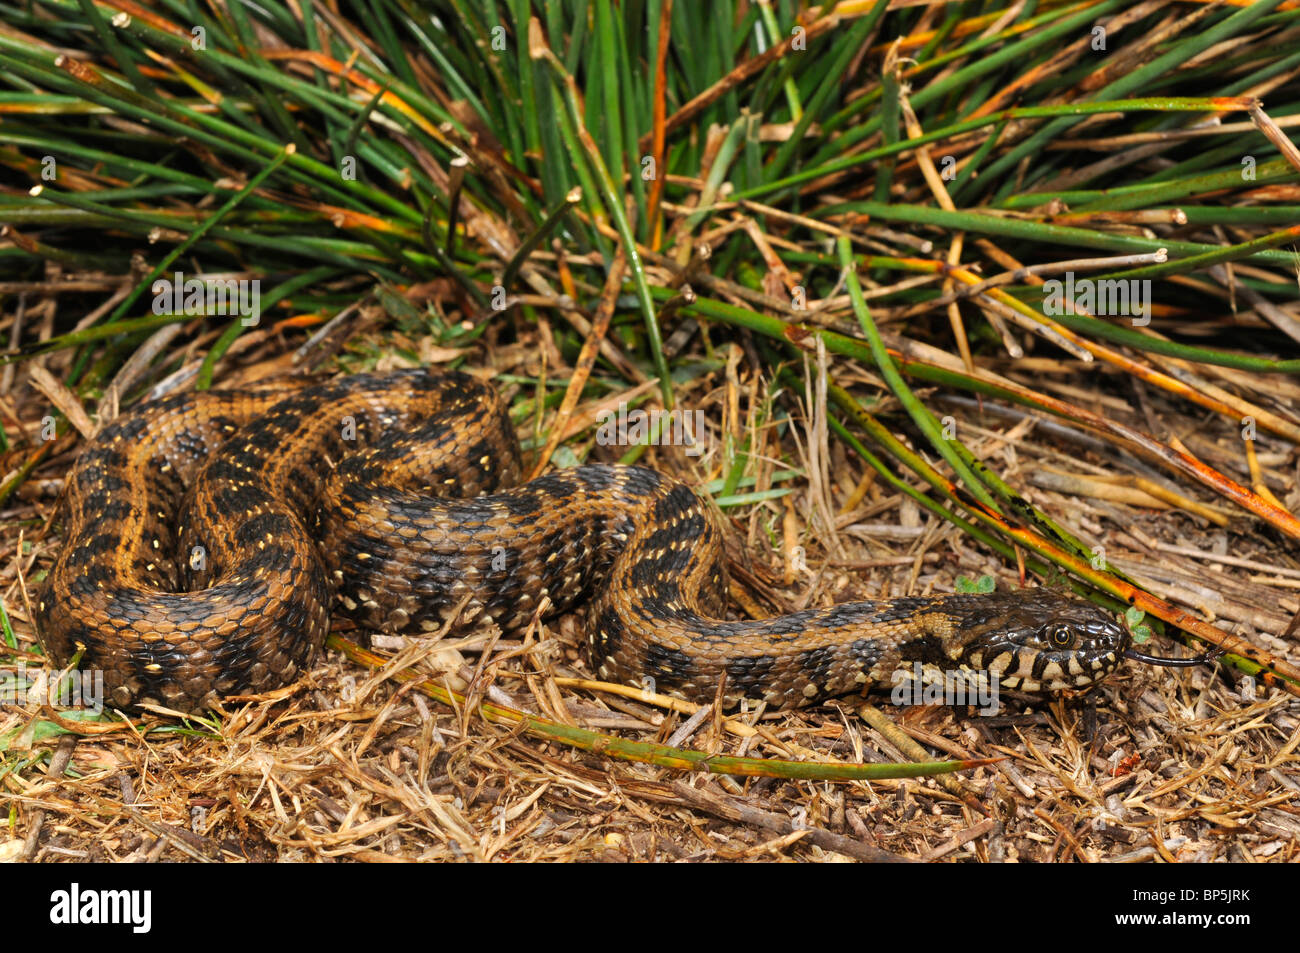 viperine snake, viperine grass snake (Natrix maura), creeping and flicking, Spain, Andalusia, Nationalpark Donana Stock Photo